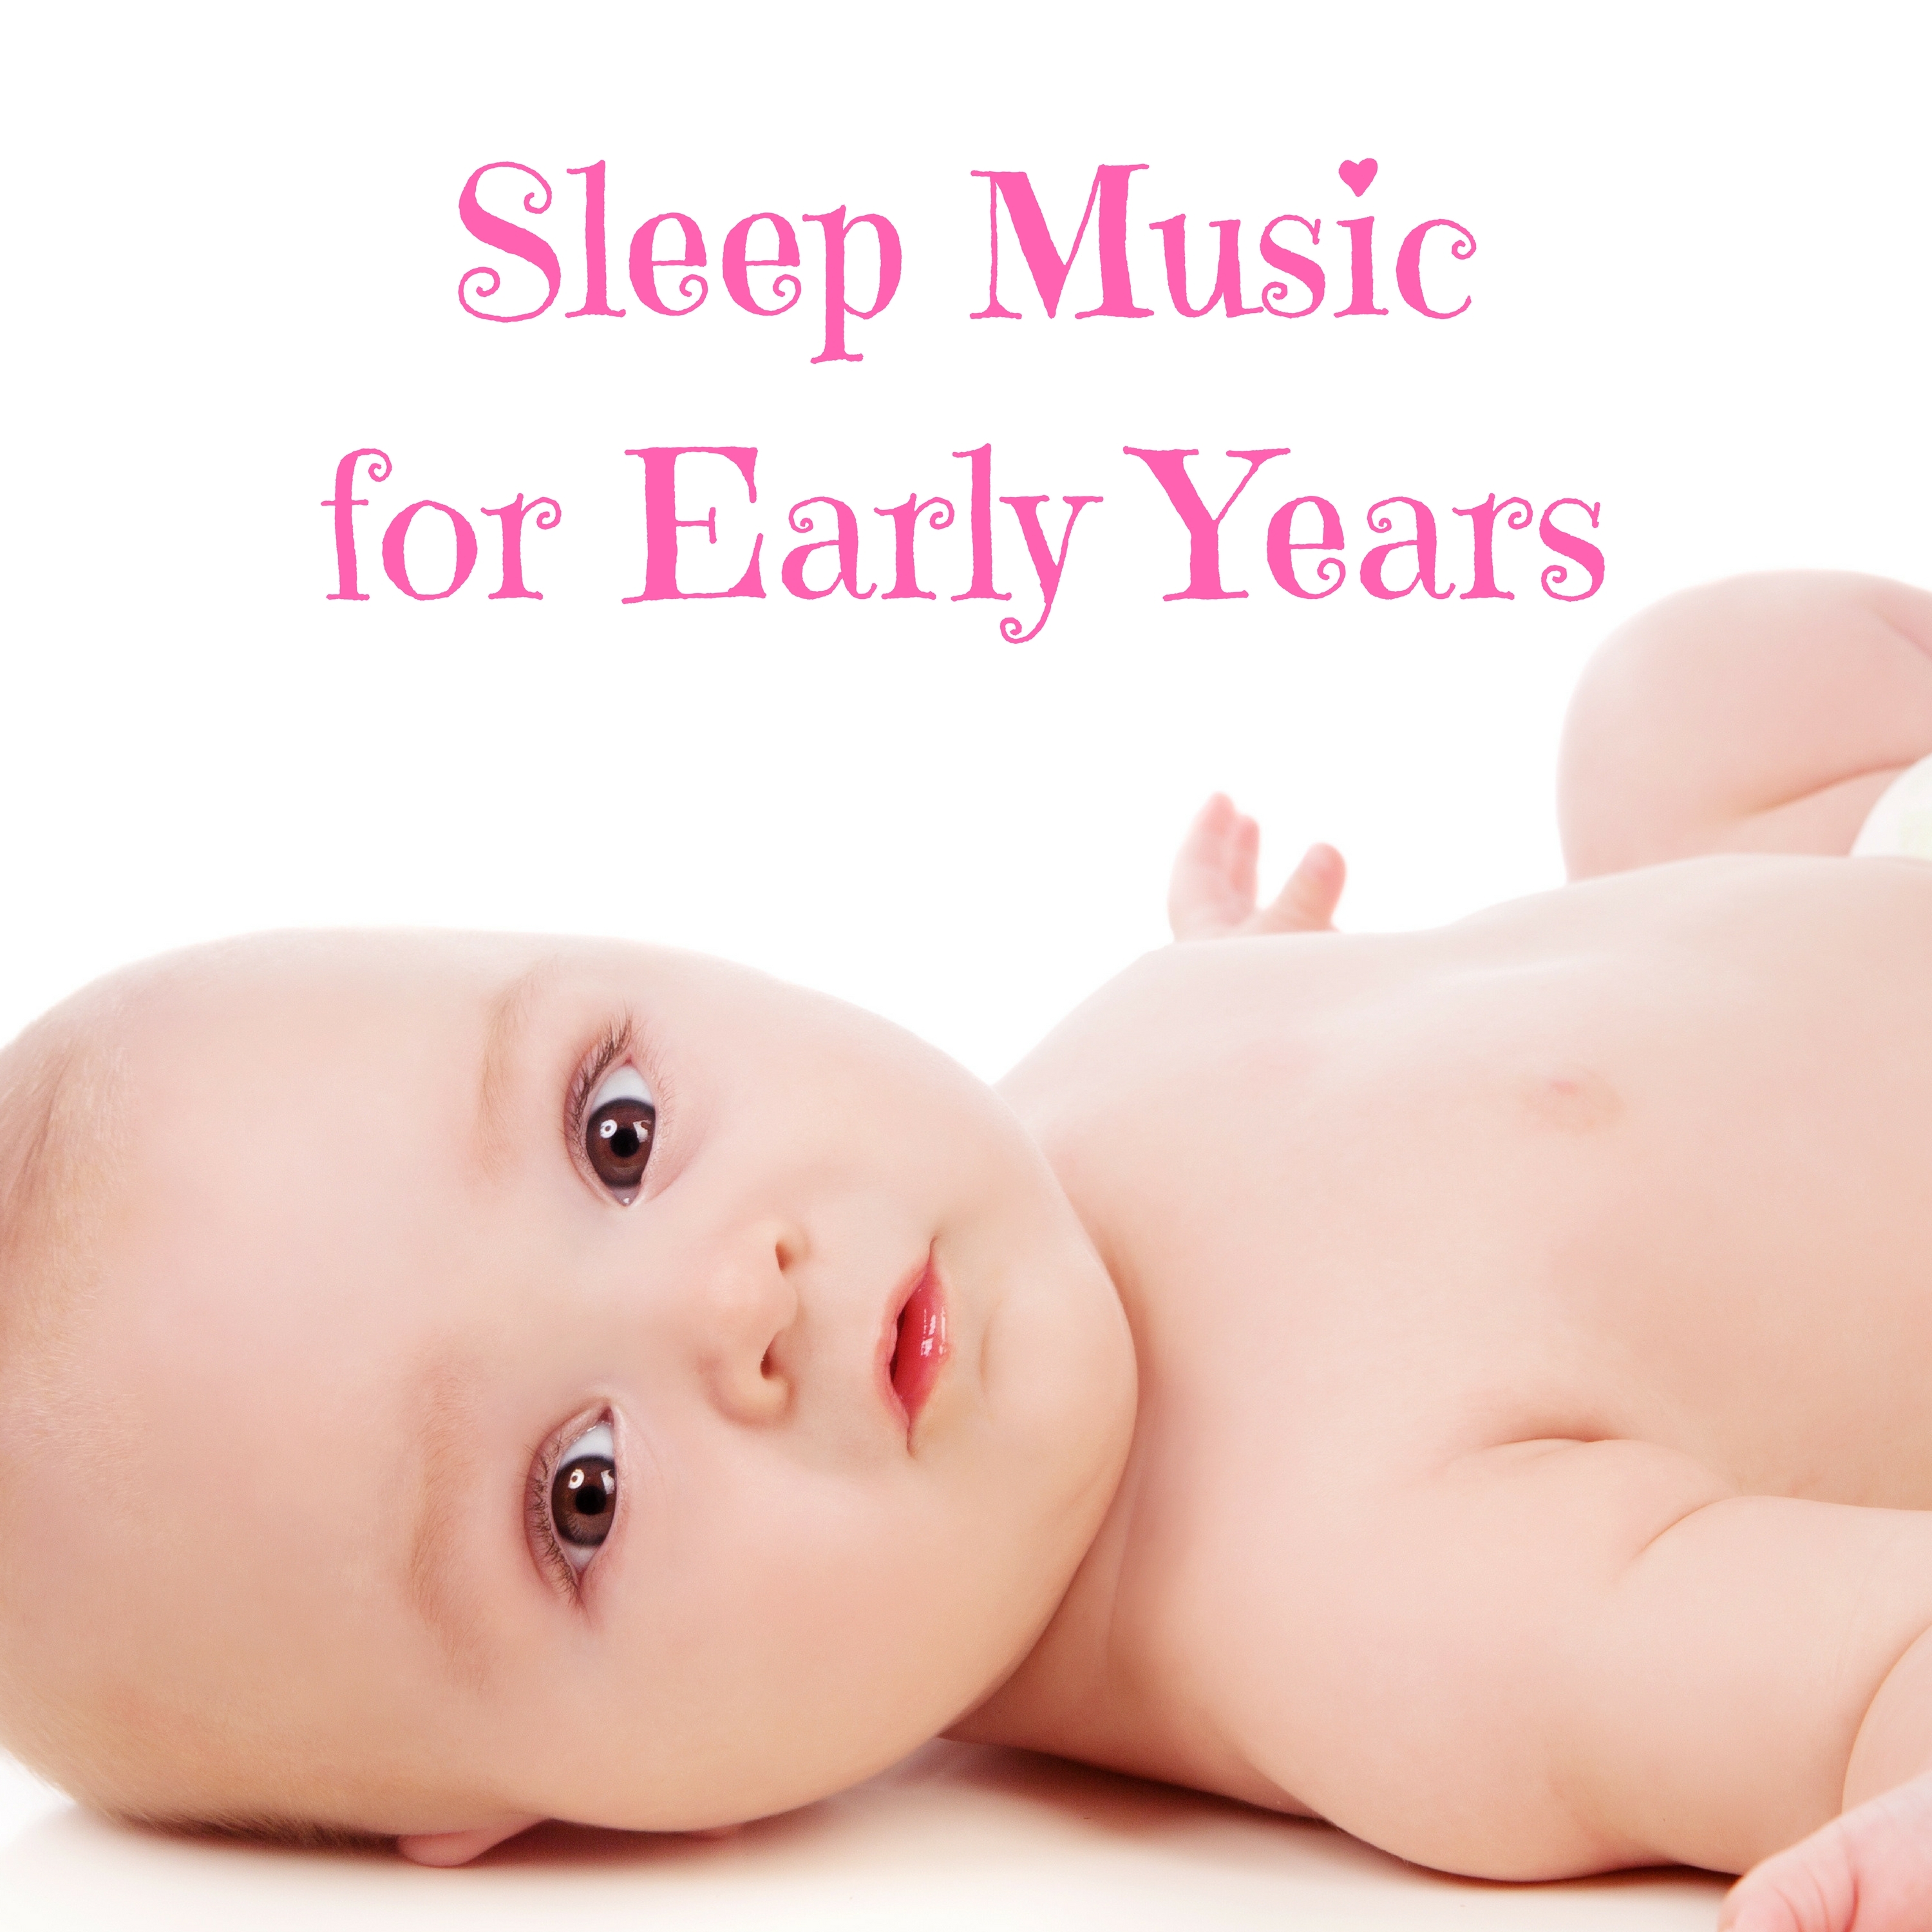 Sleep Music for Early Years, Baby Night Music